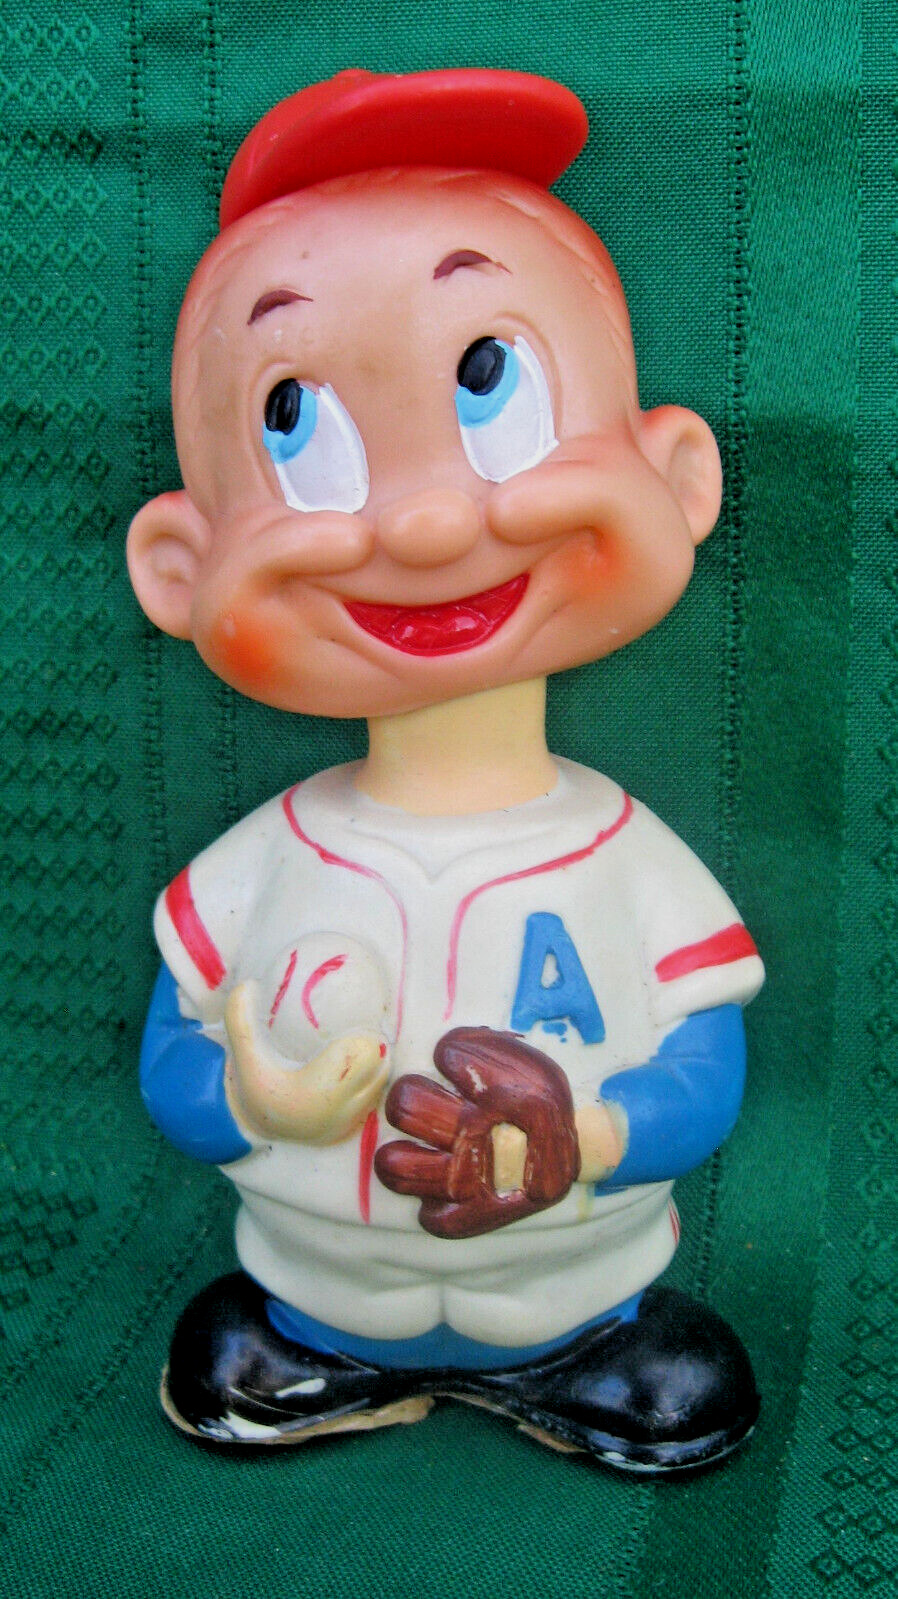 Vintage ALPS Windup Bobble Head Nodder Baseball Player